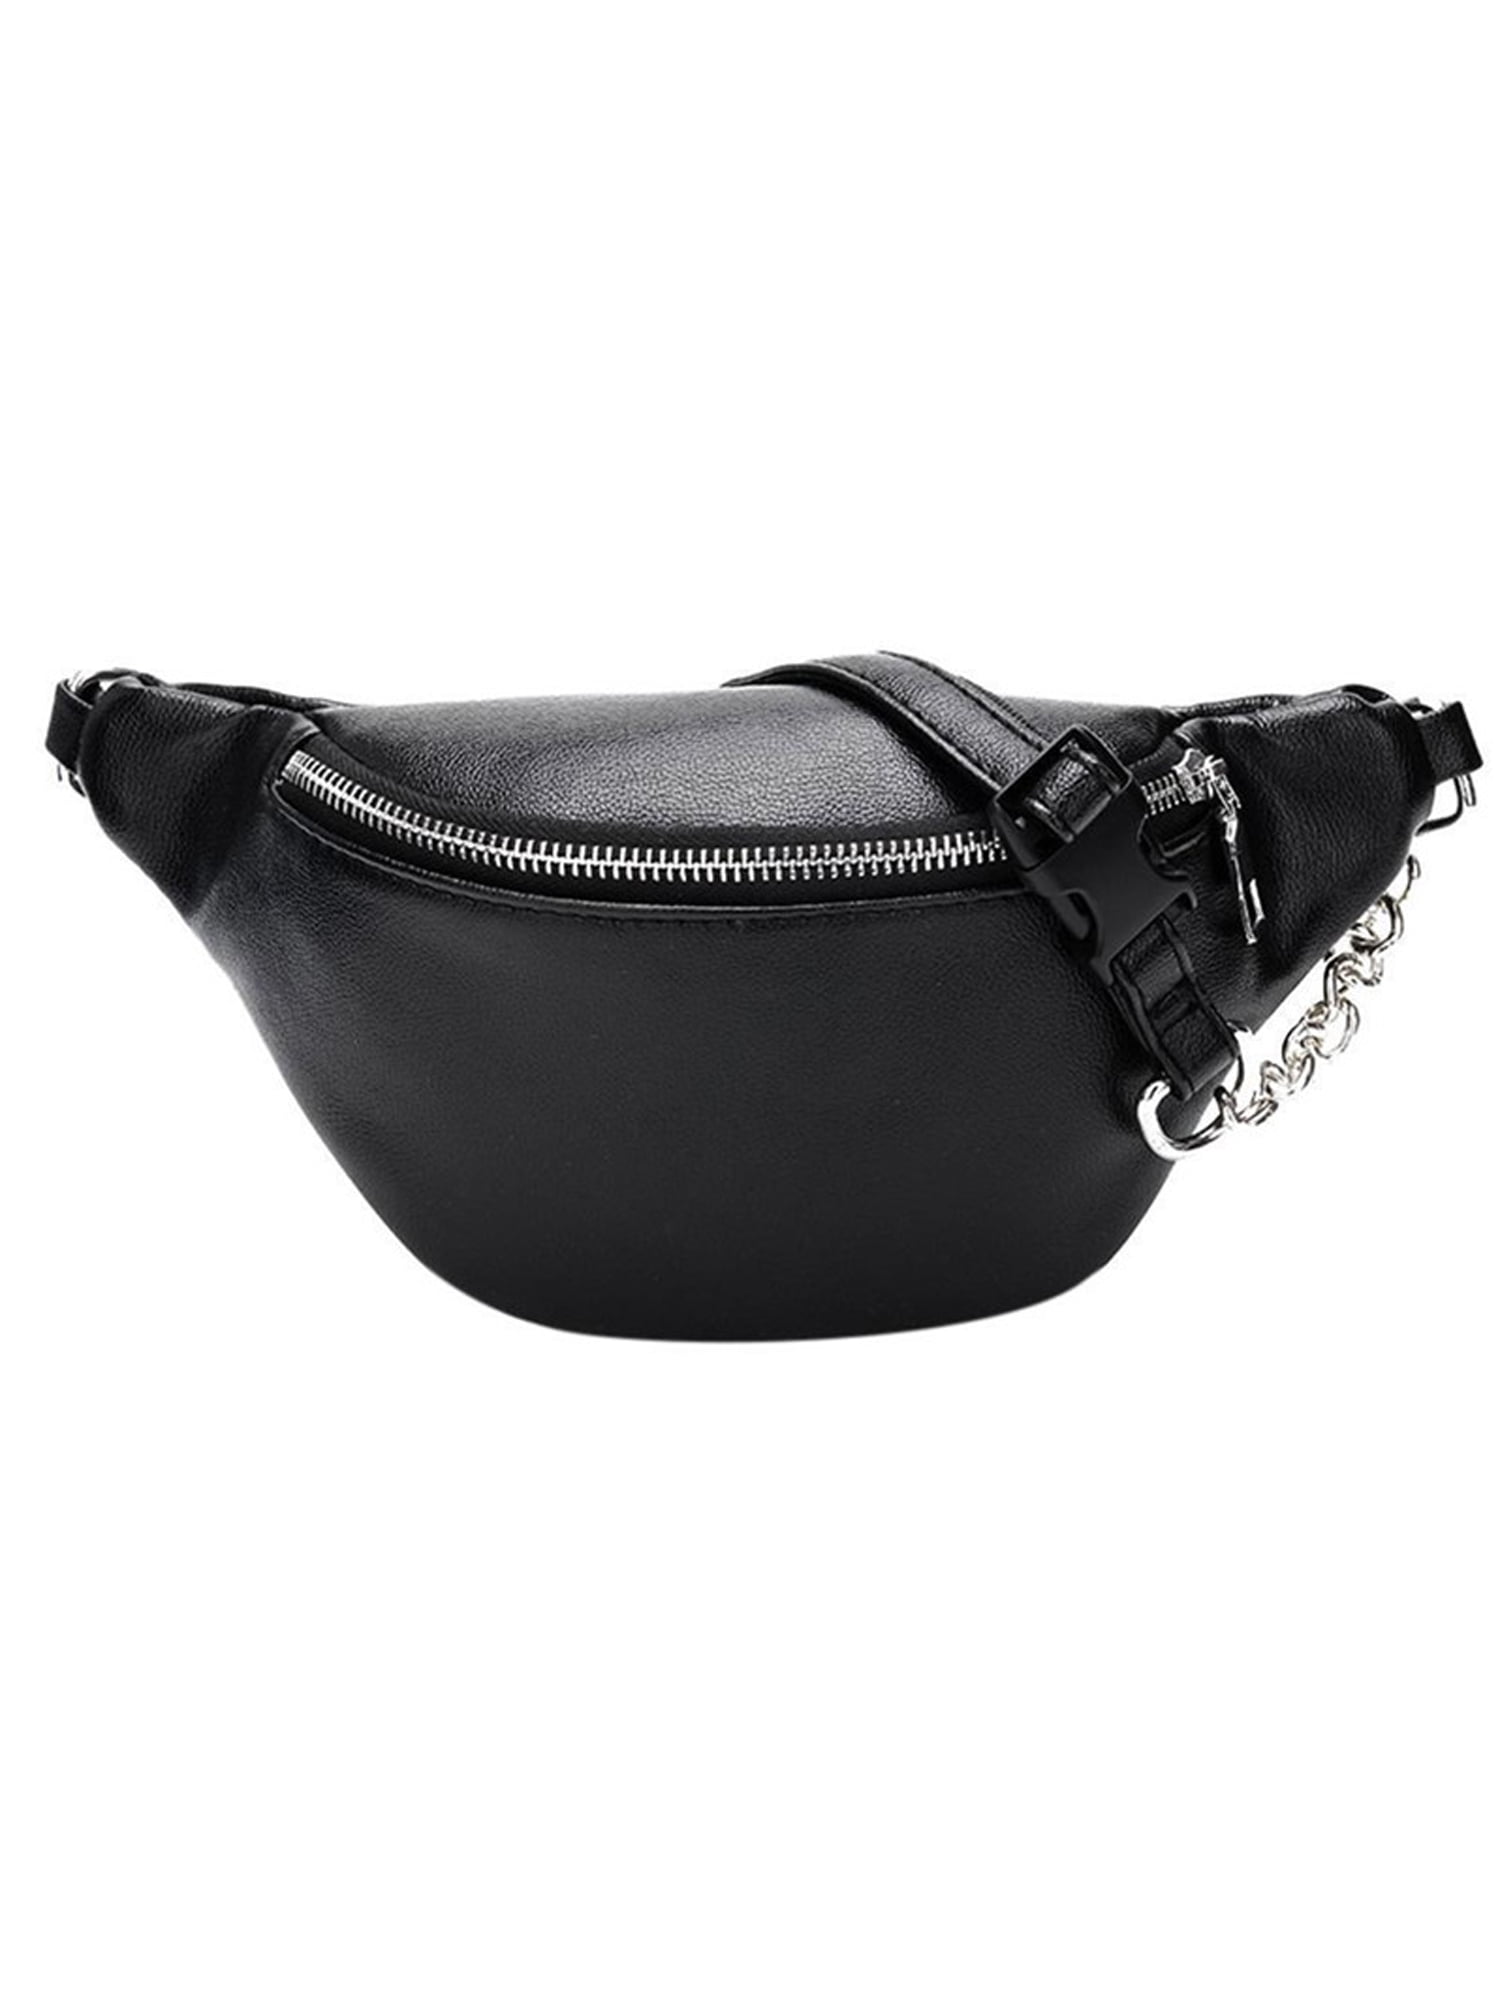 Travel PU Leather Waist Belt Bum Bag Fanny Pack Phone Money Purse Bag Pouch